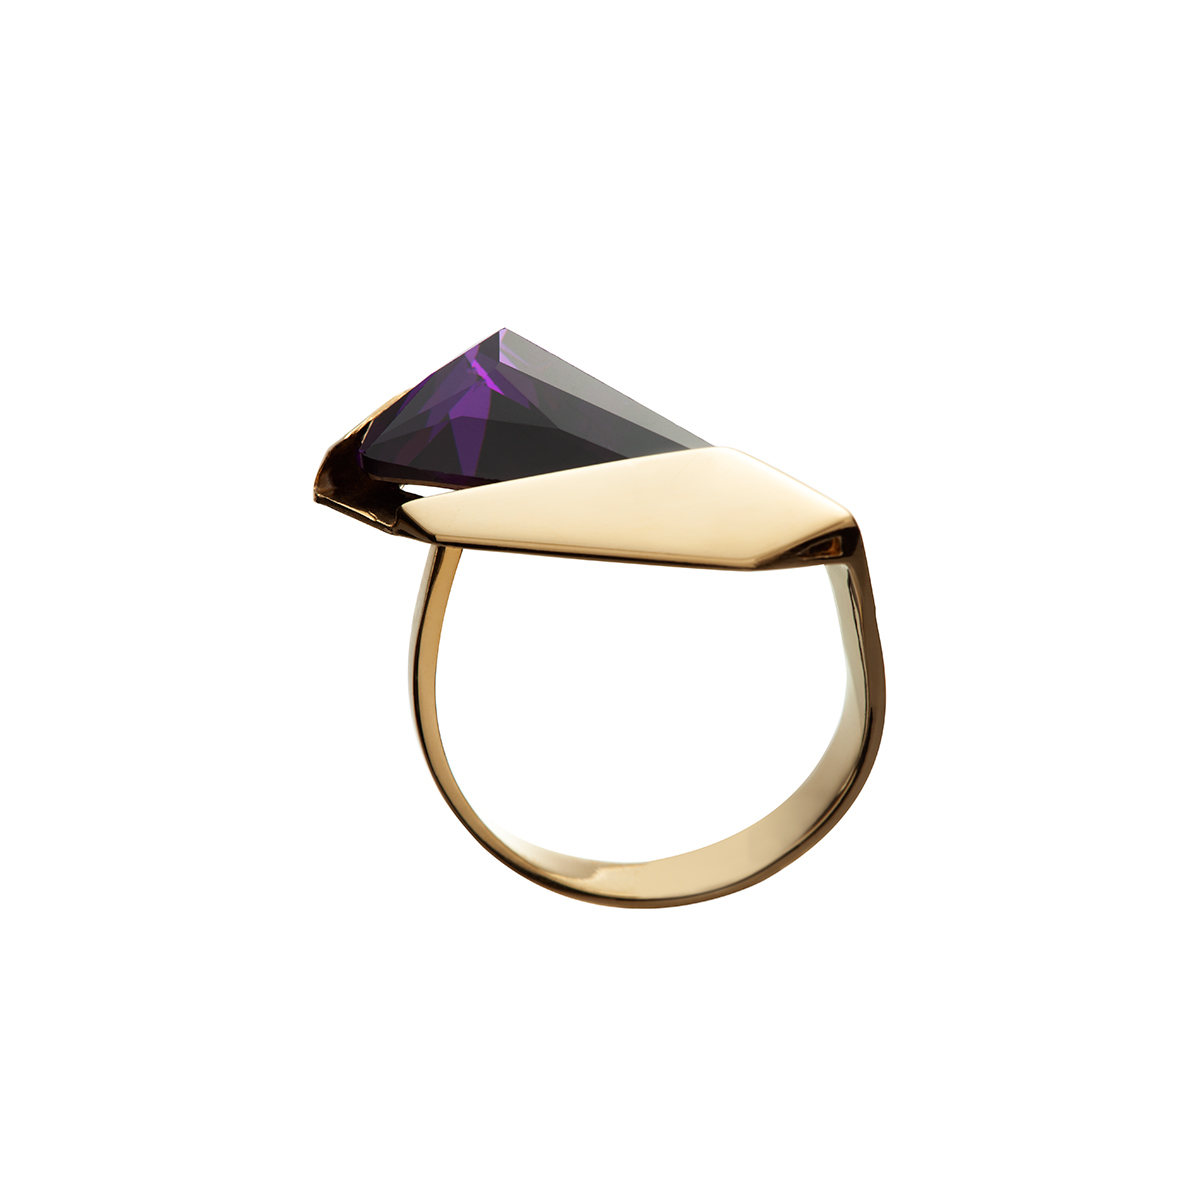 Kua handmade ring in 9k or 18k gold and violet hydrothermal quartz 2 designed by Belen Bajo